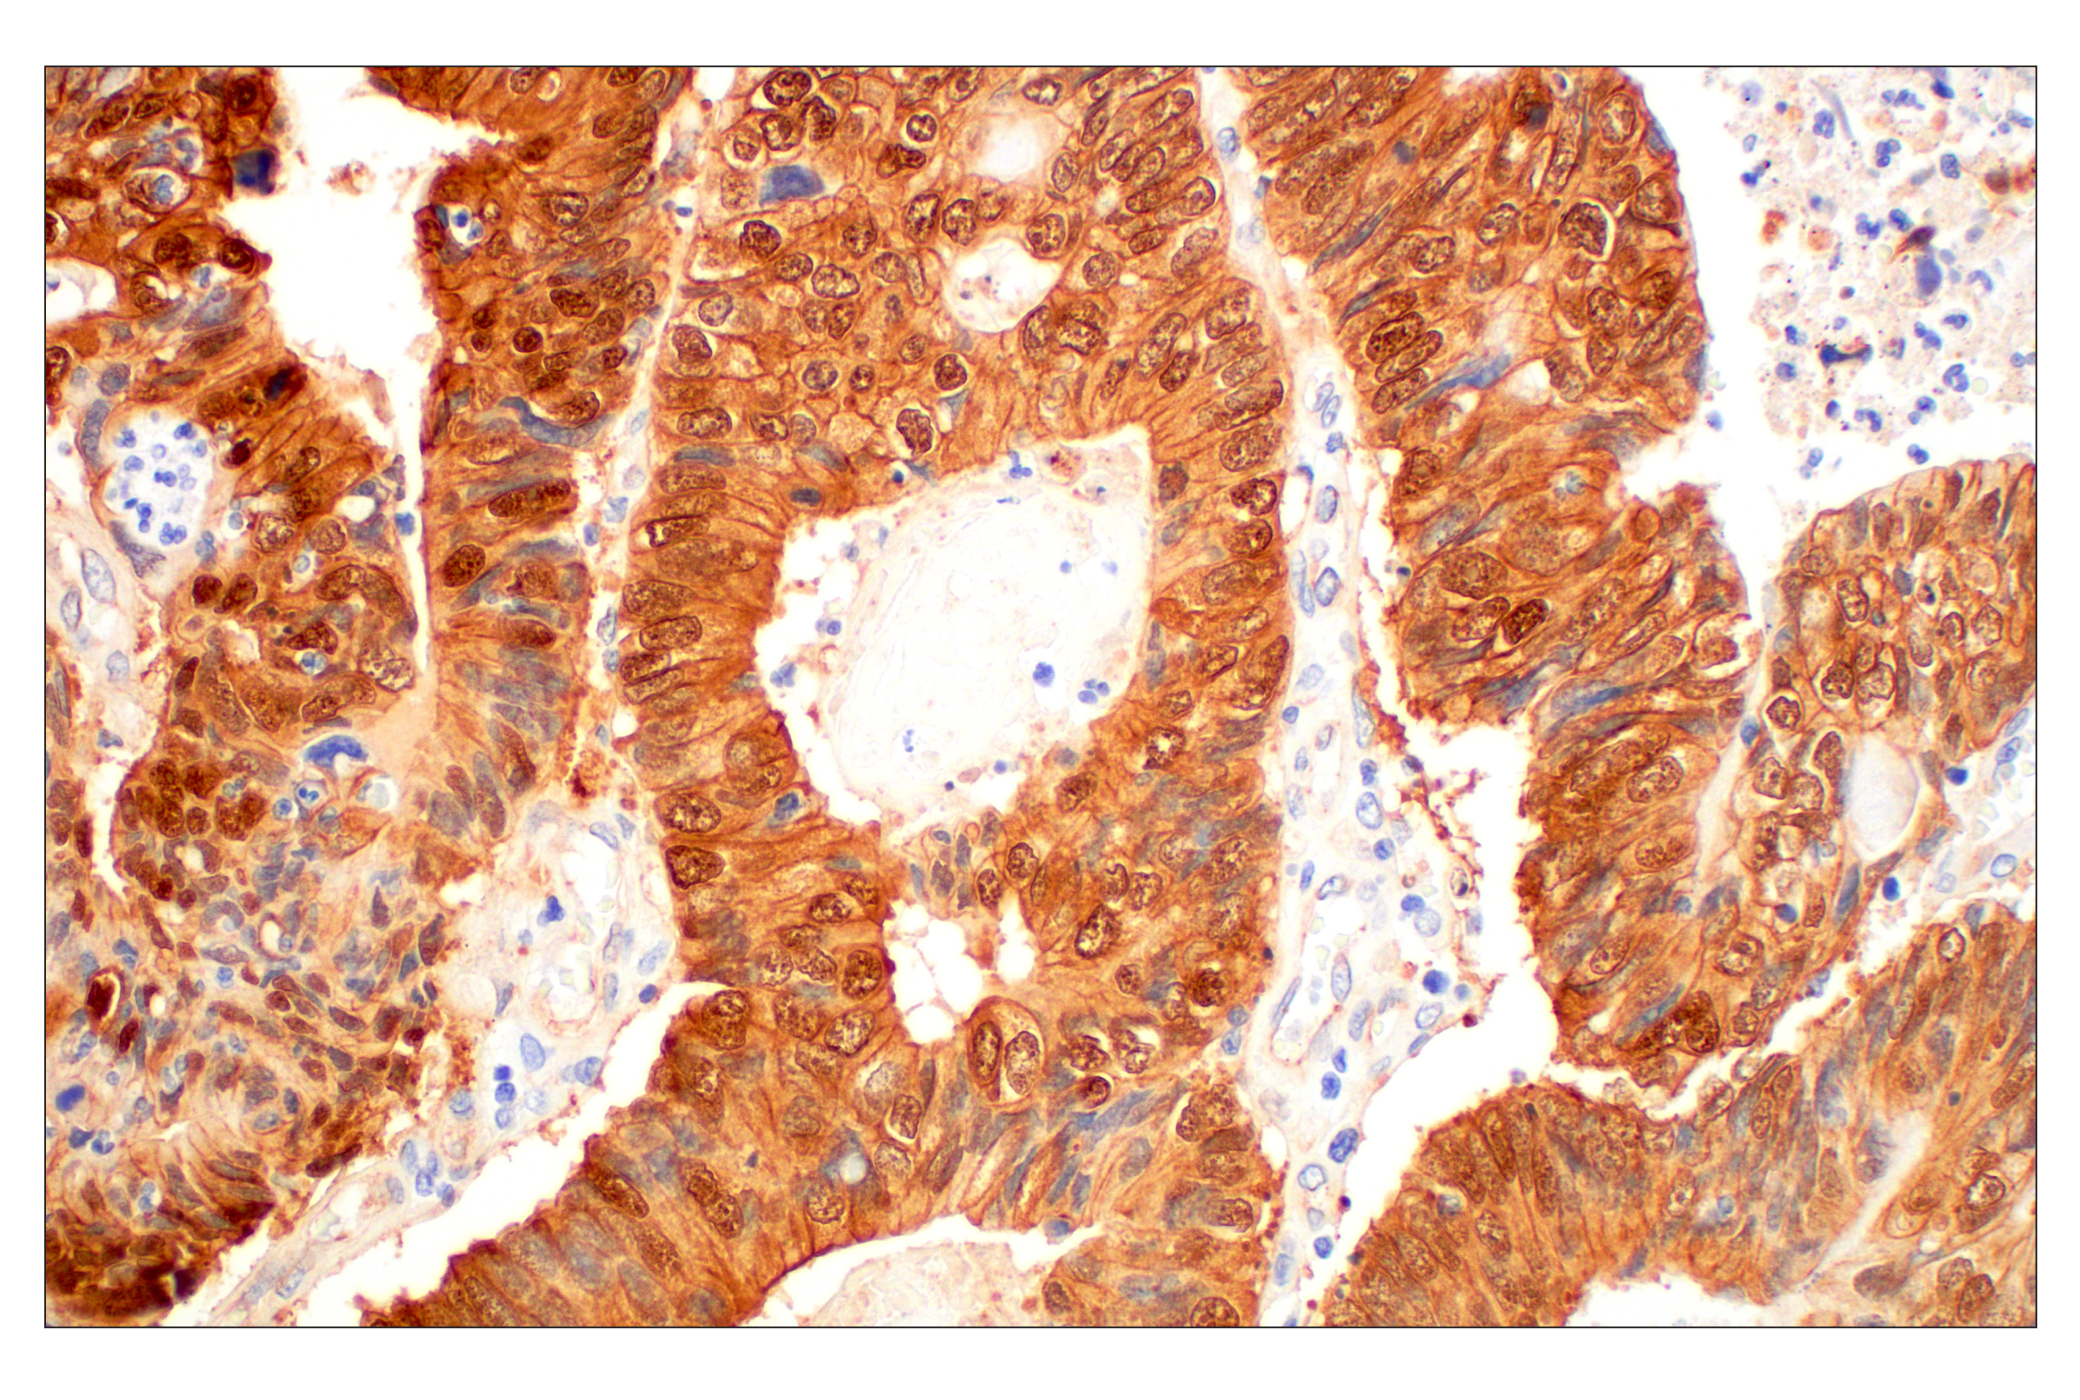  Image 17: PhosphoPlus® β-Catenin (Ser675) Antibody Duet